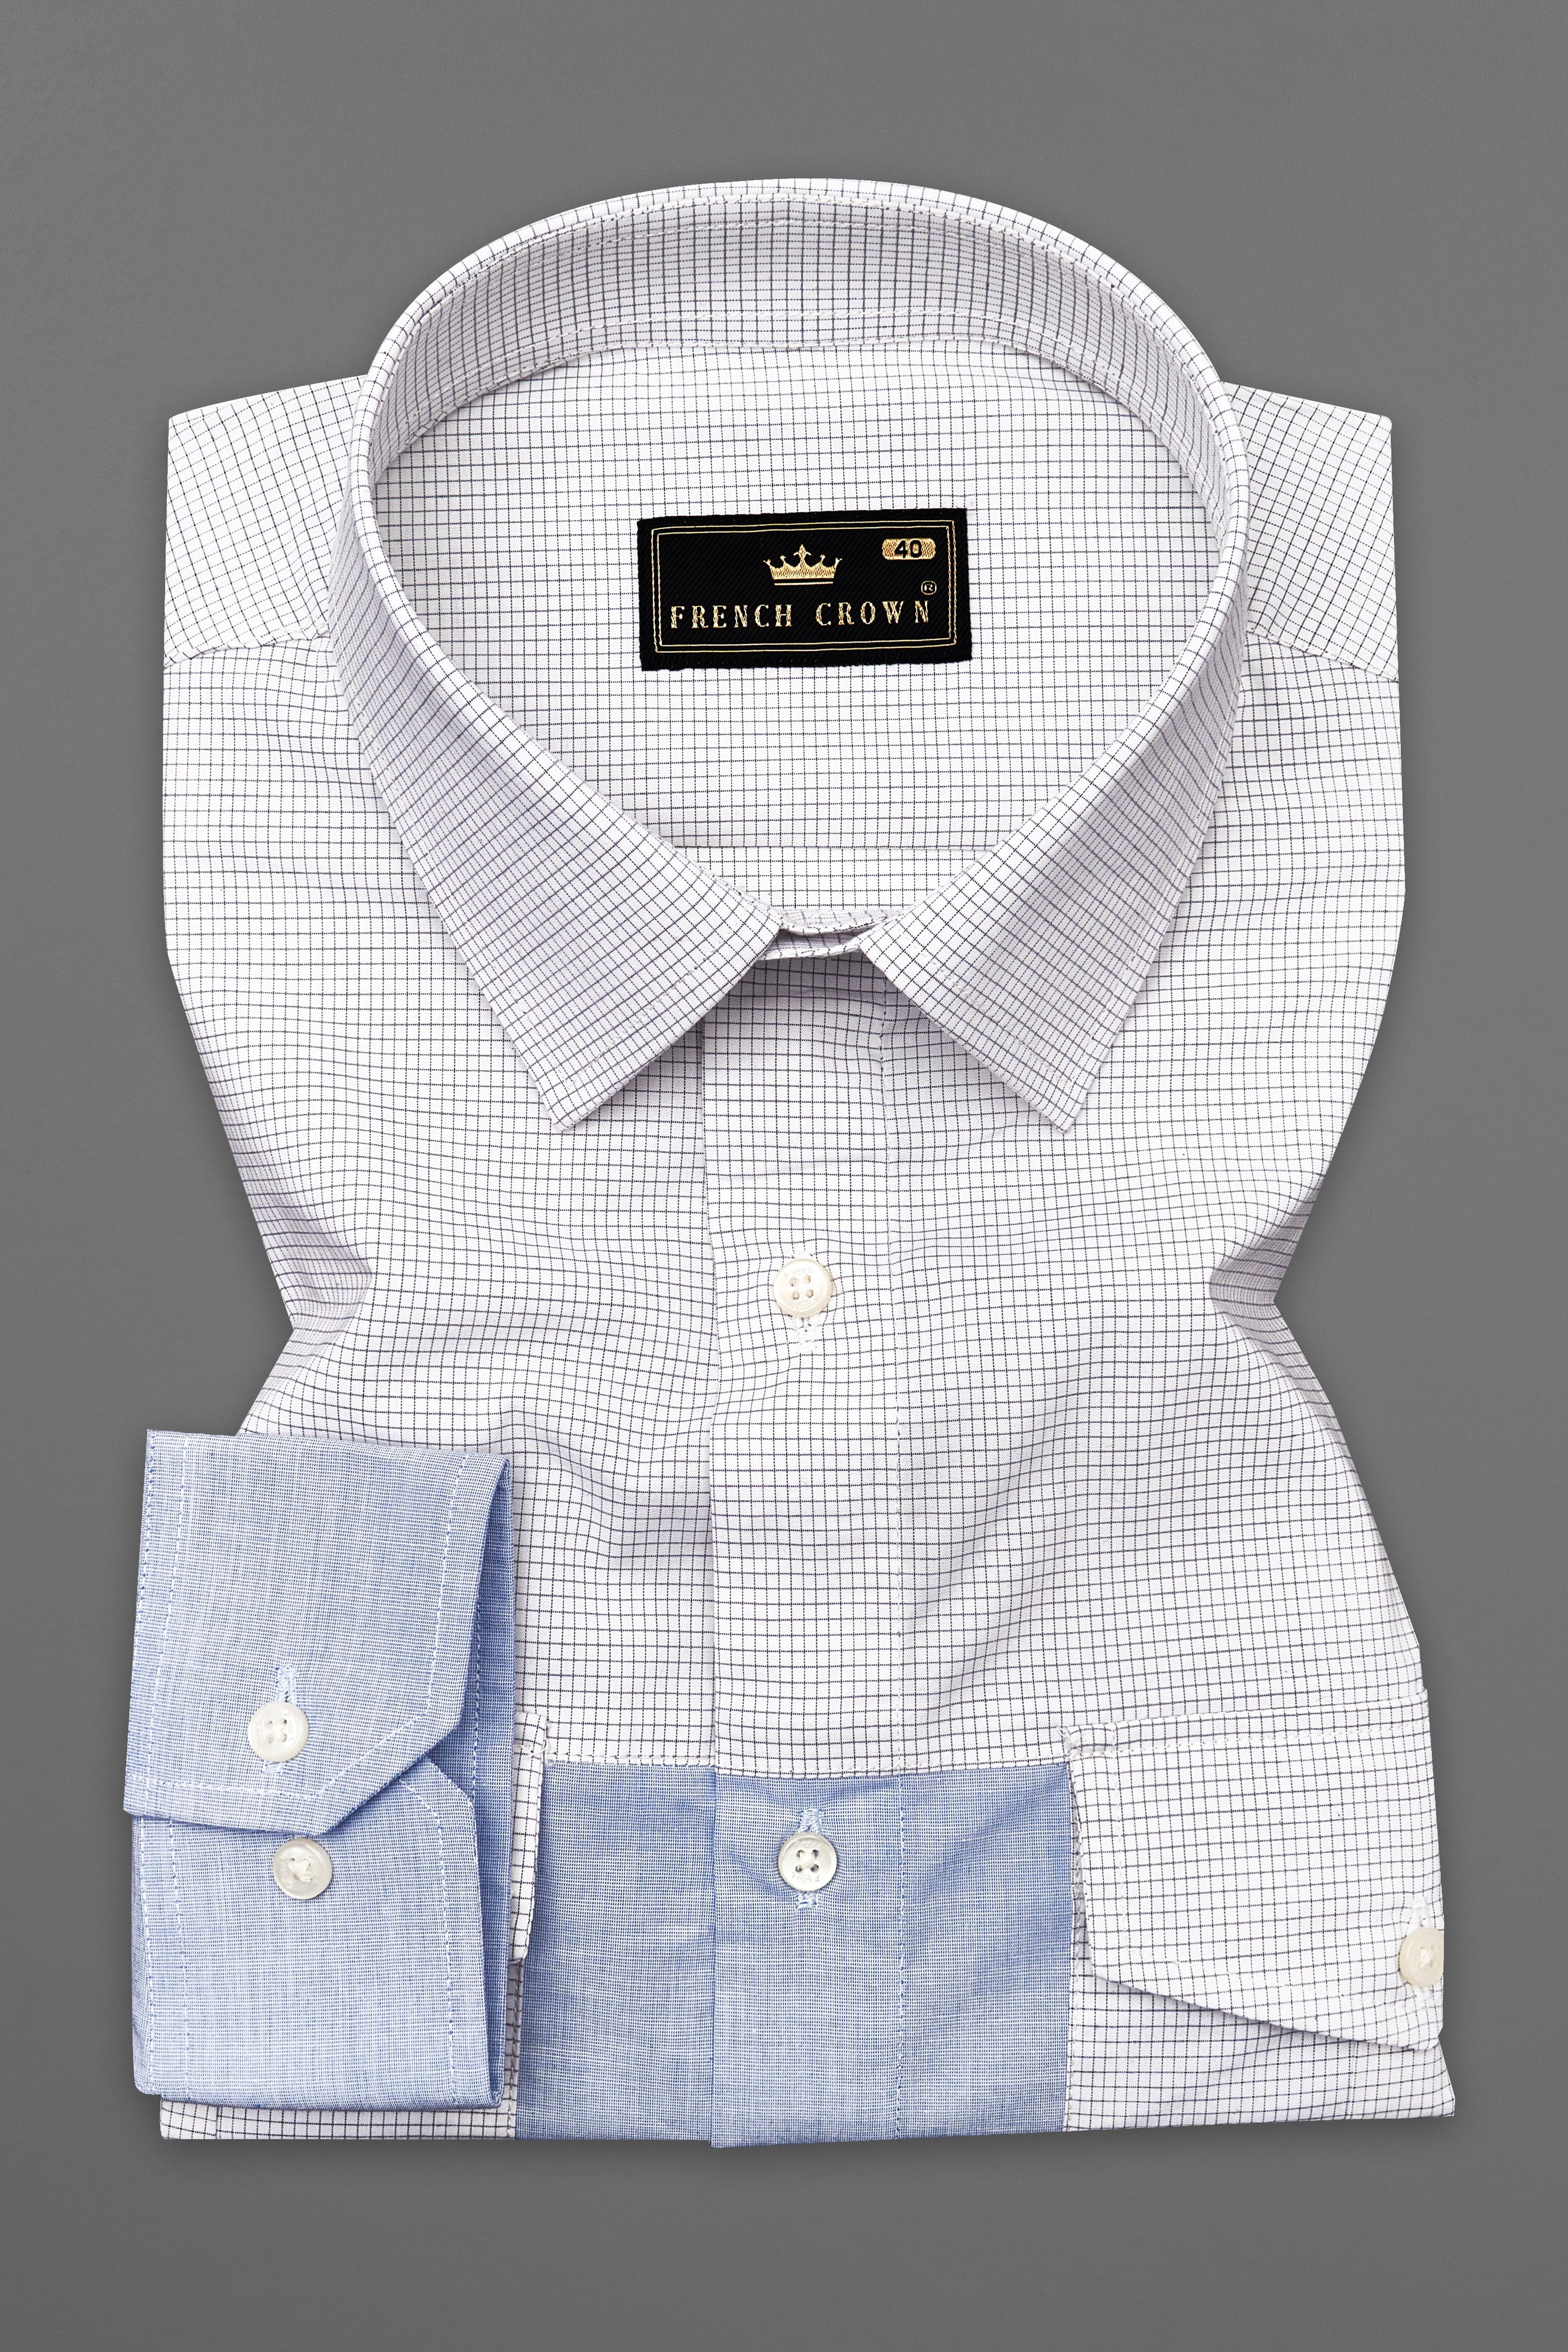 Off White with Pastel Blue Premium Cotton Designer Shirt